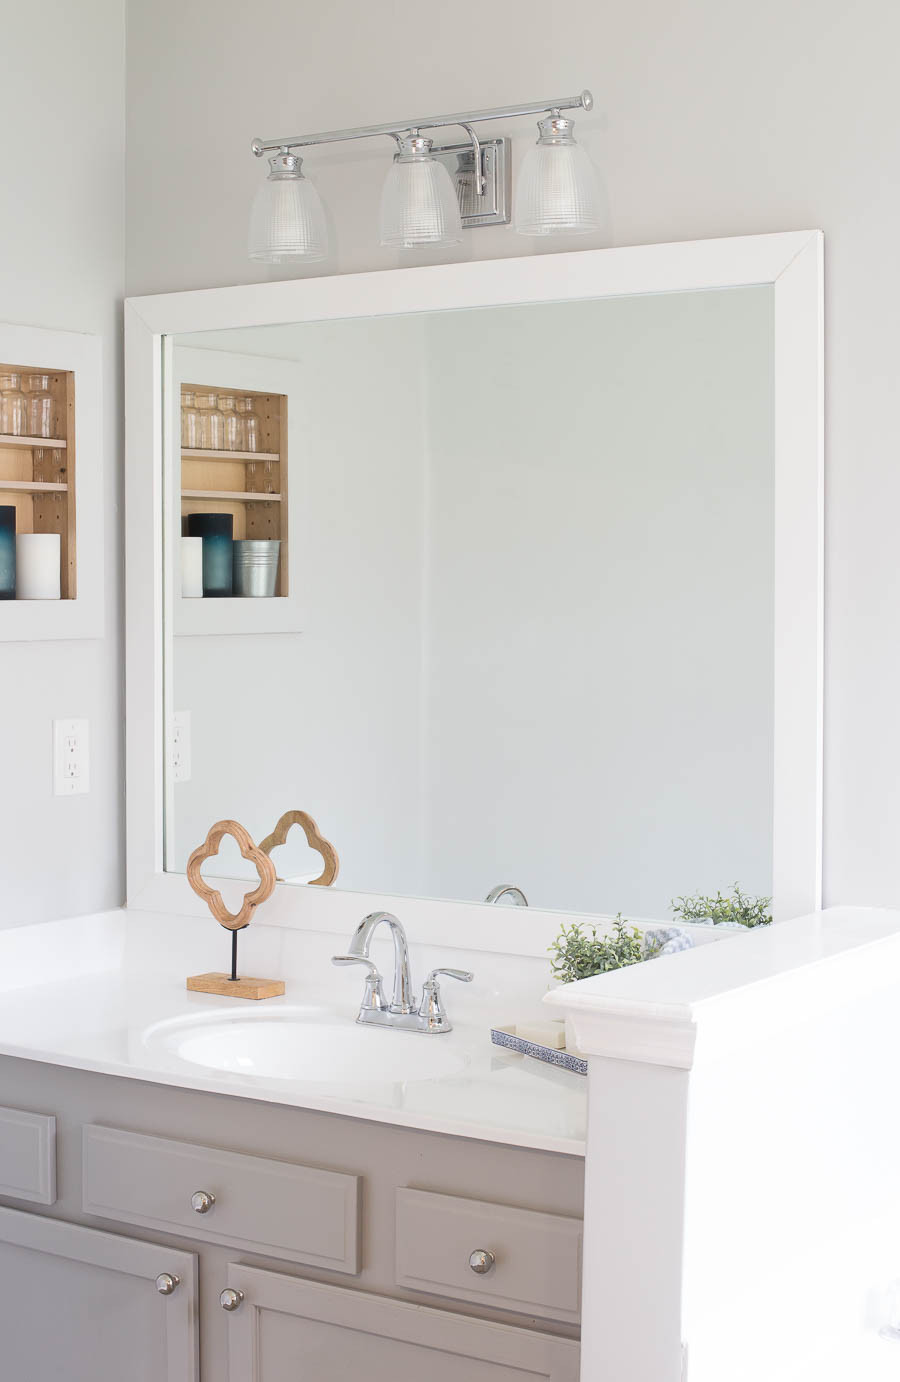 Framed Bathroom Mirrors
 How to Frame a Bathroom Mirror Easy DIY project